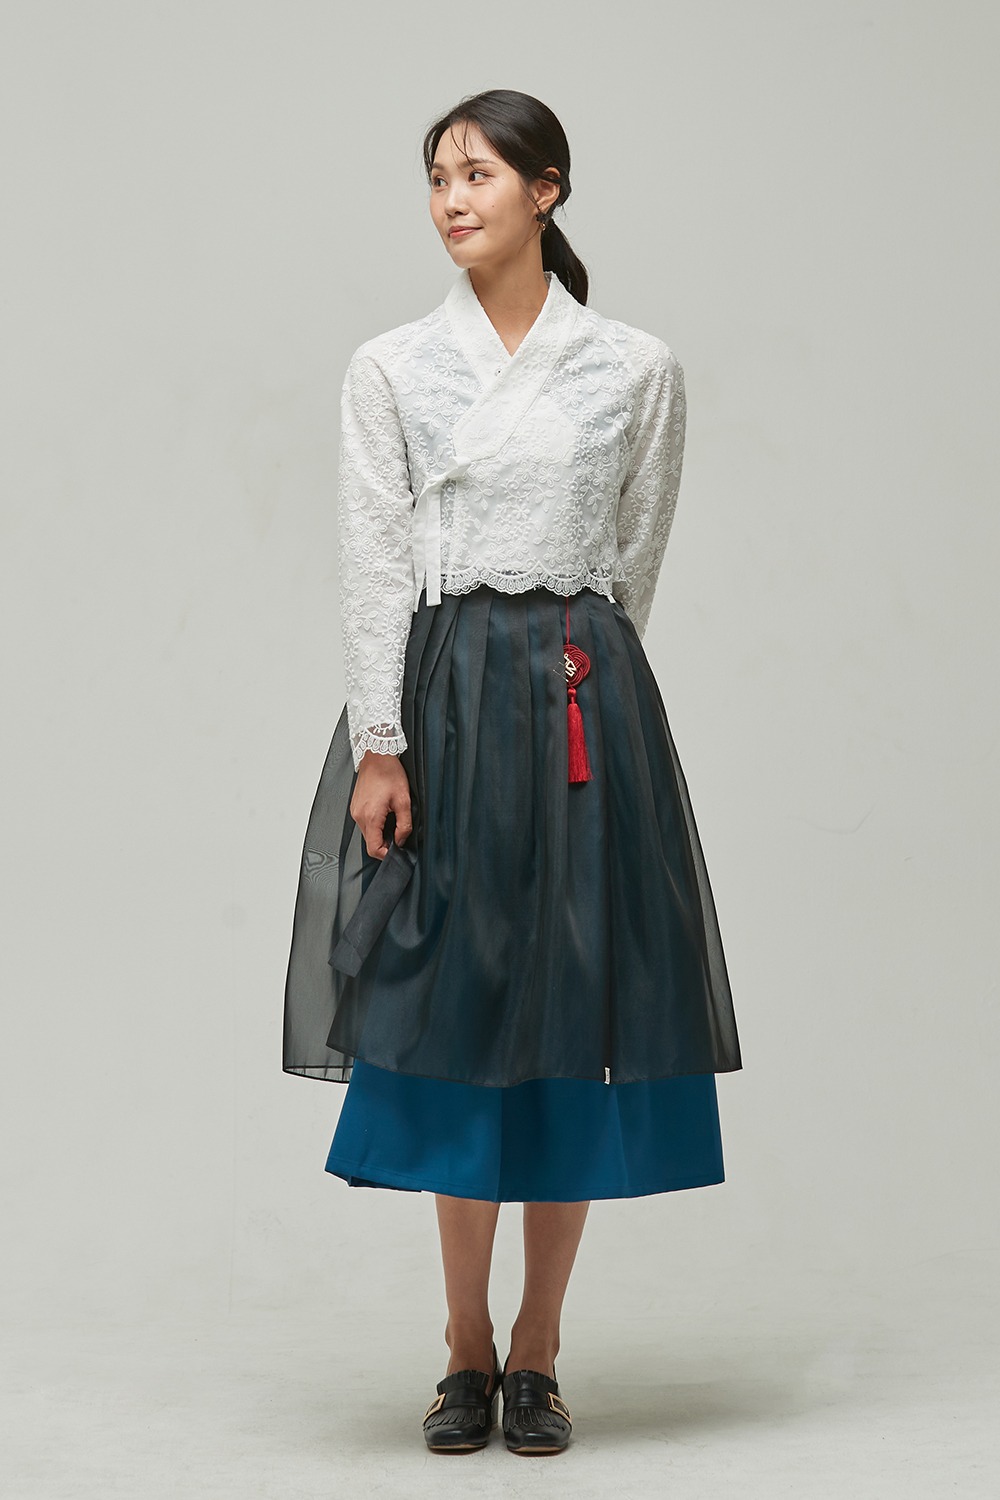 See-through Waist Skirt [Black]